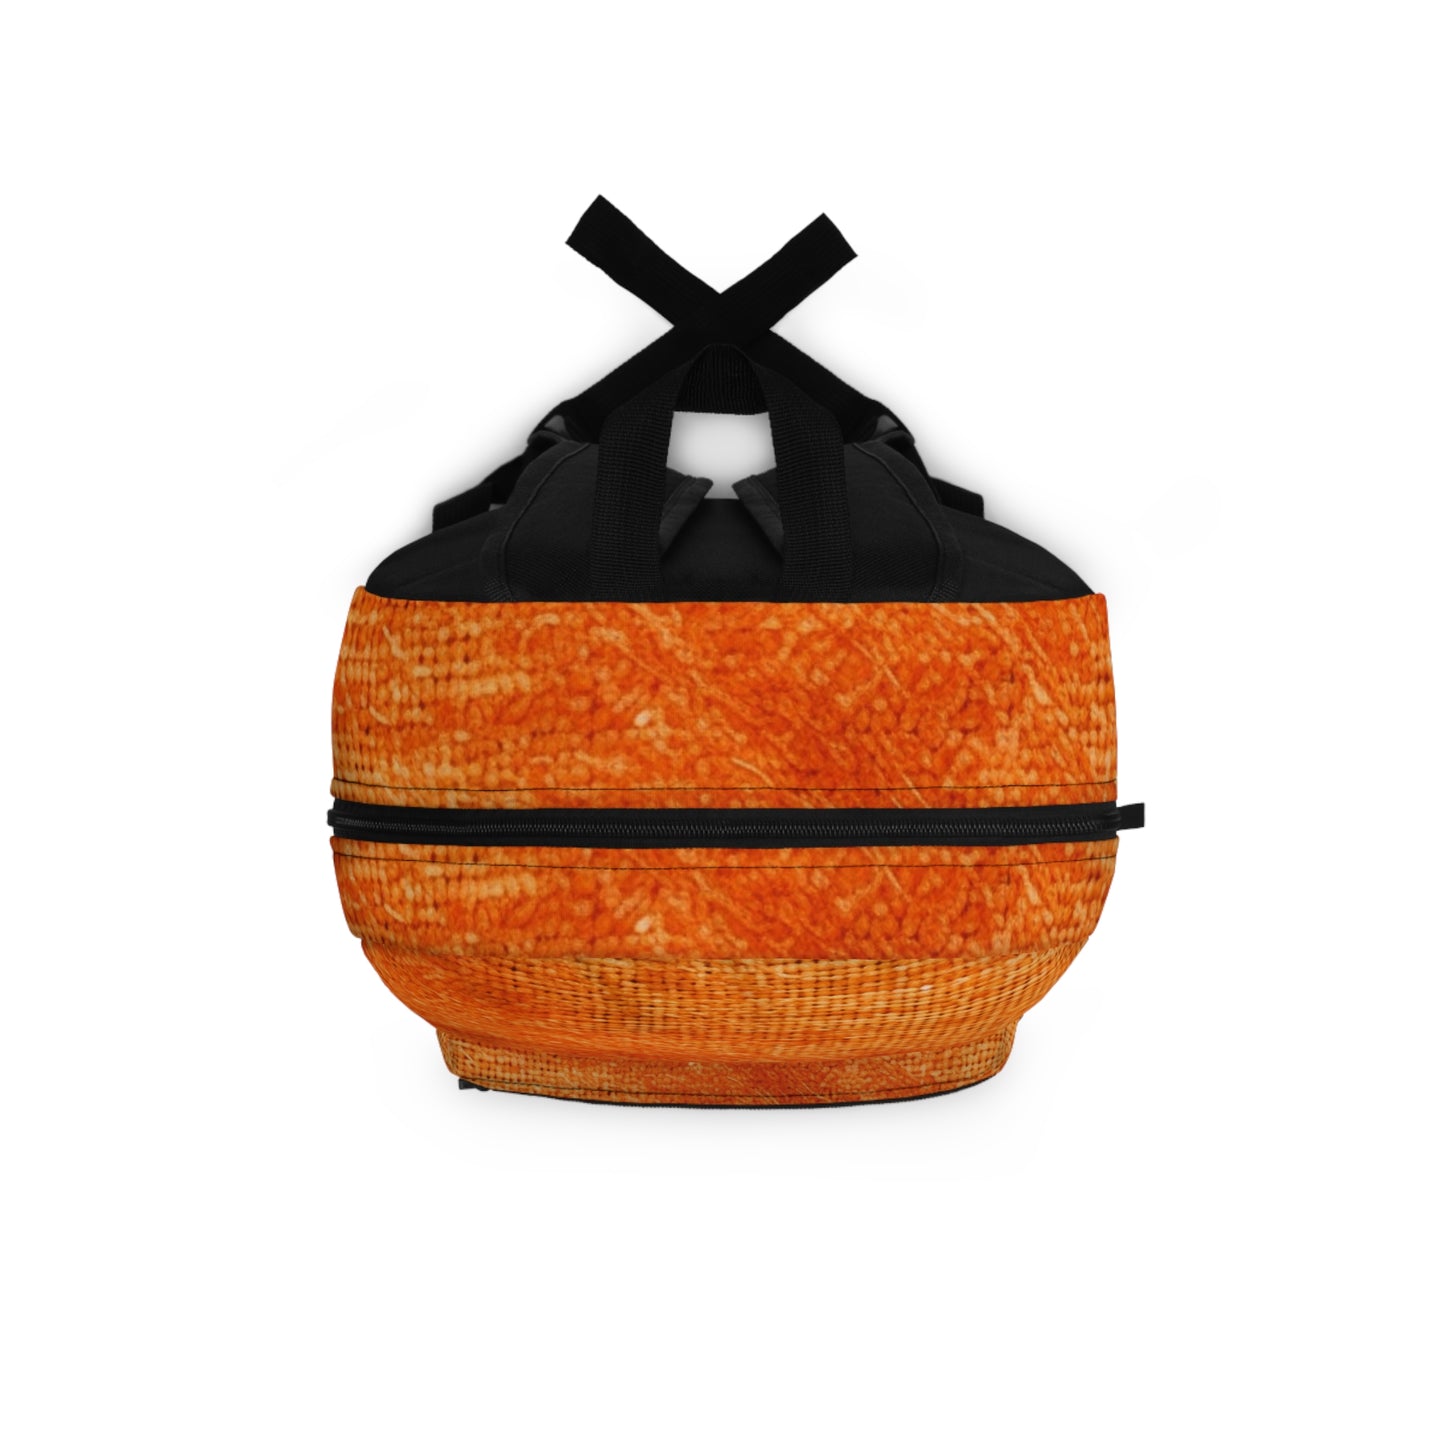 Burnt Orange/Rust: Denim-Inspired Autumn Fall Color Fabric - Backpack